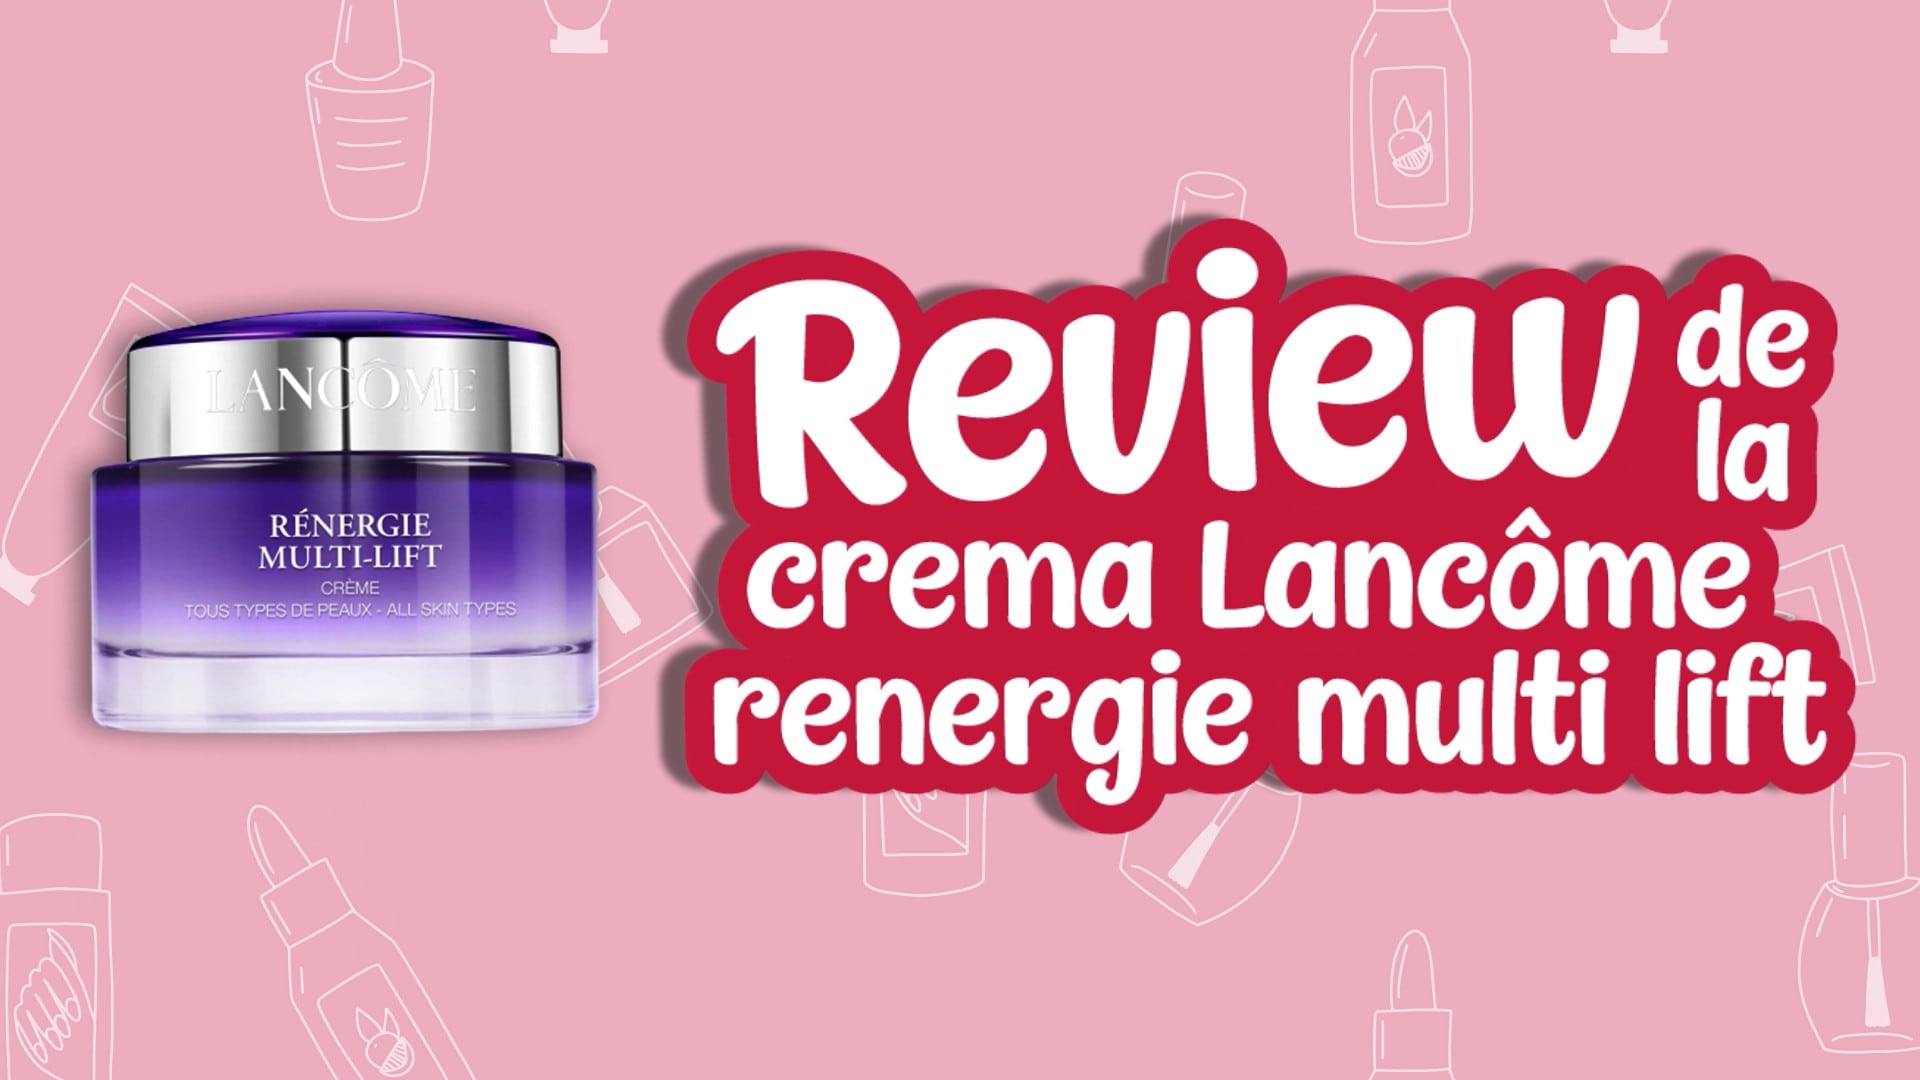 Opiniones de la crema Lancôme renergie multi lift - Review de la crema Lancôme renergie multi lift